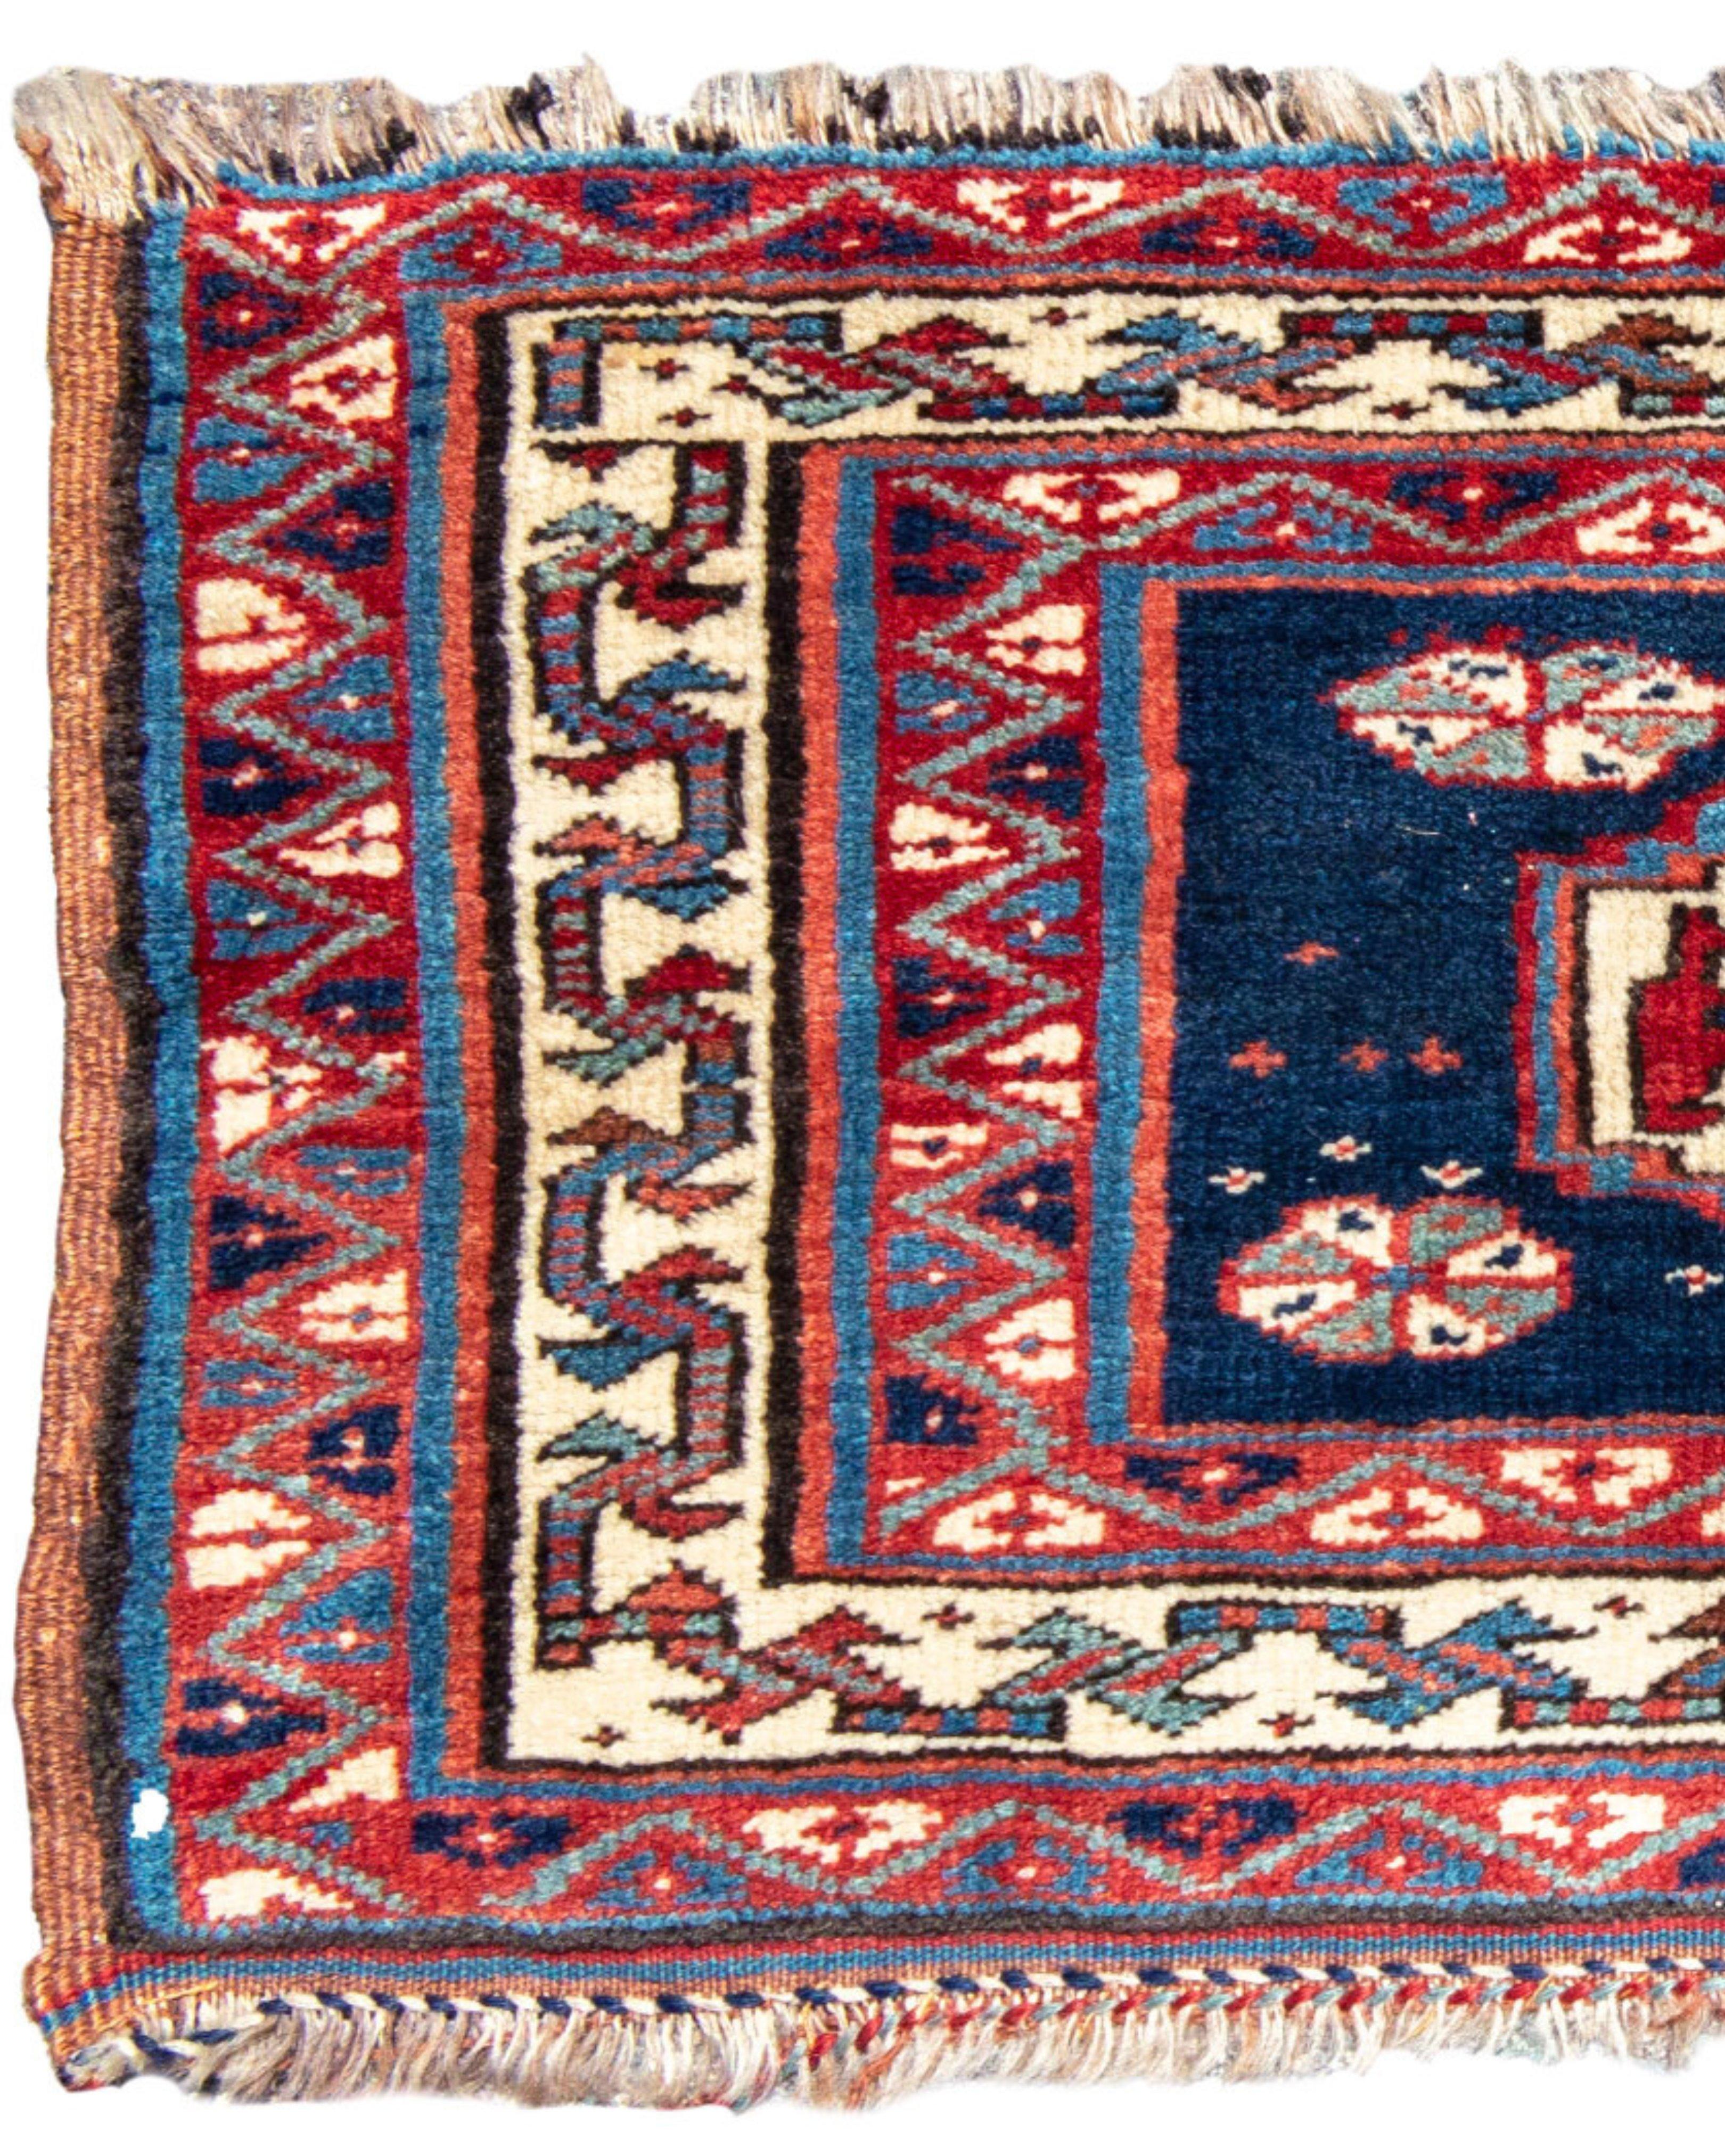 Ancien tapis persan Veramin Torba, 19e siècle

Informations supplémentaires :
Dimensions : 1.3